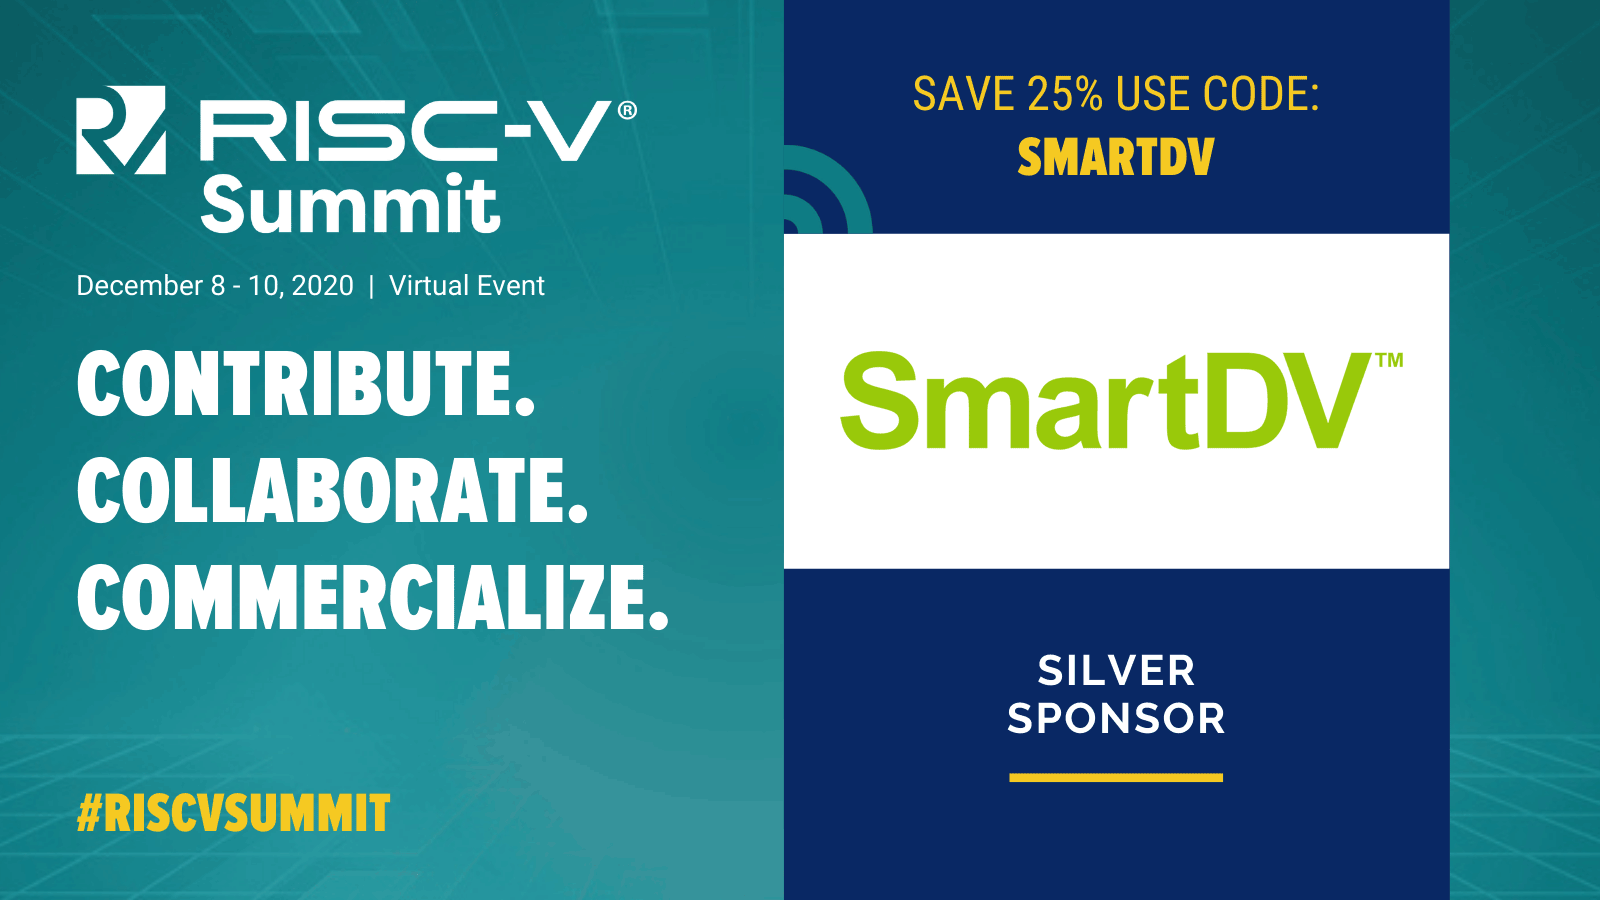 See SmartDV at the RISC-V Summit